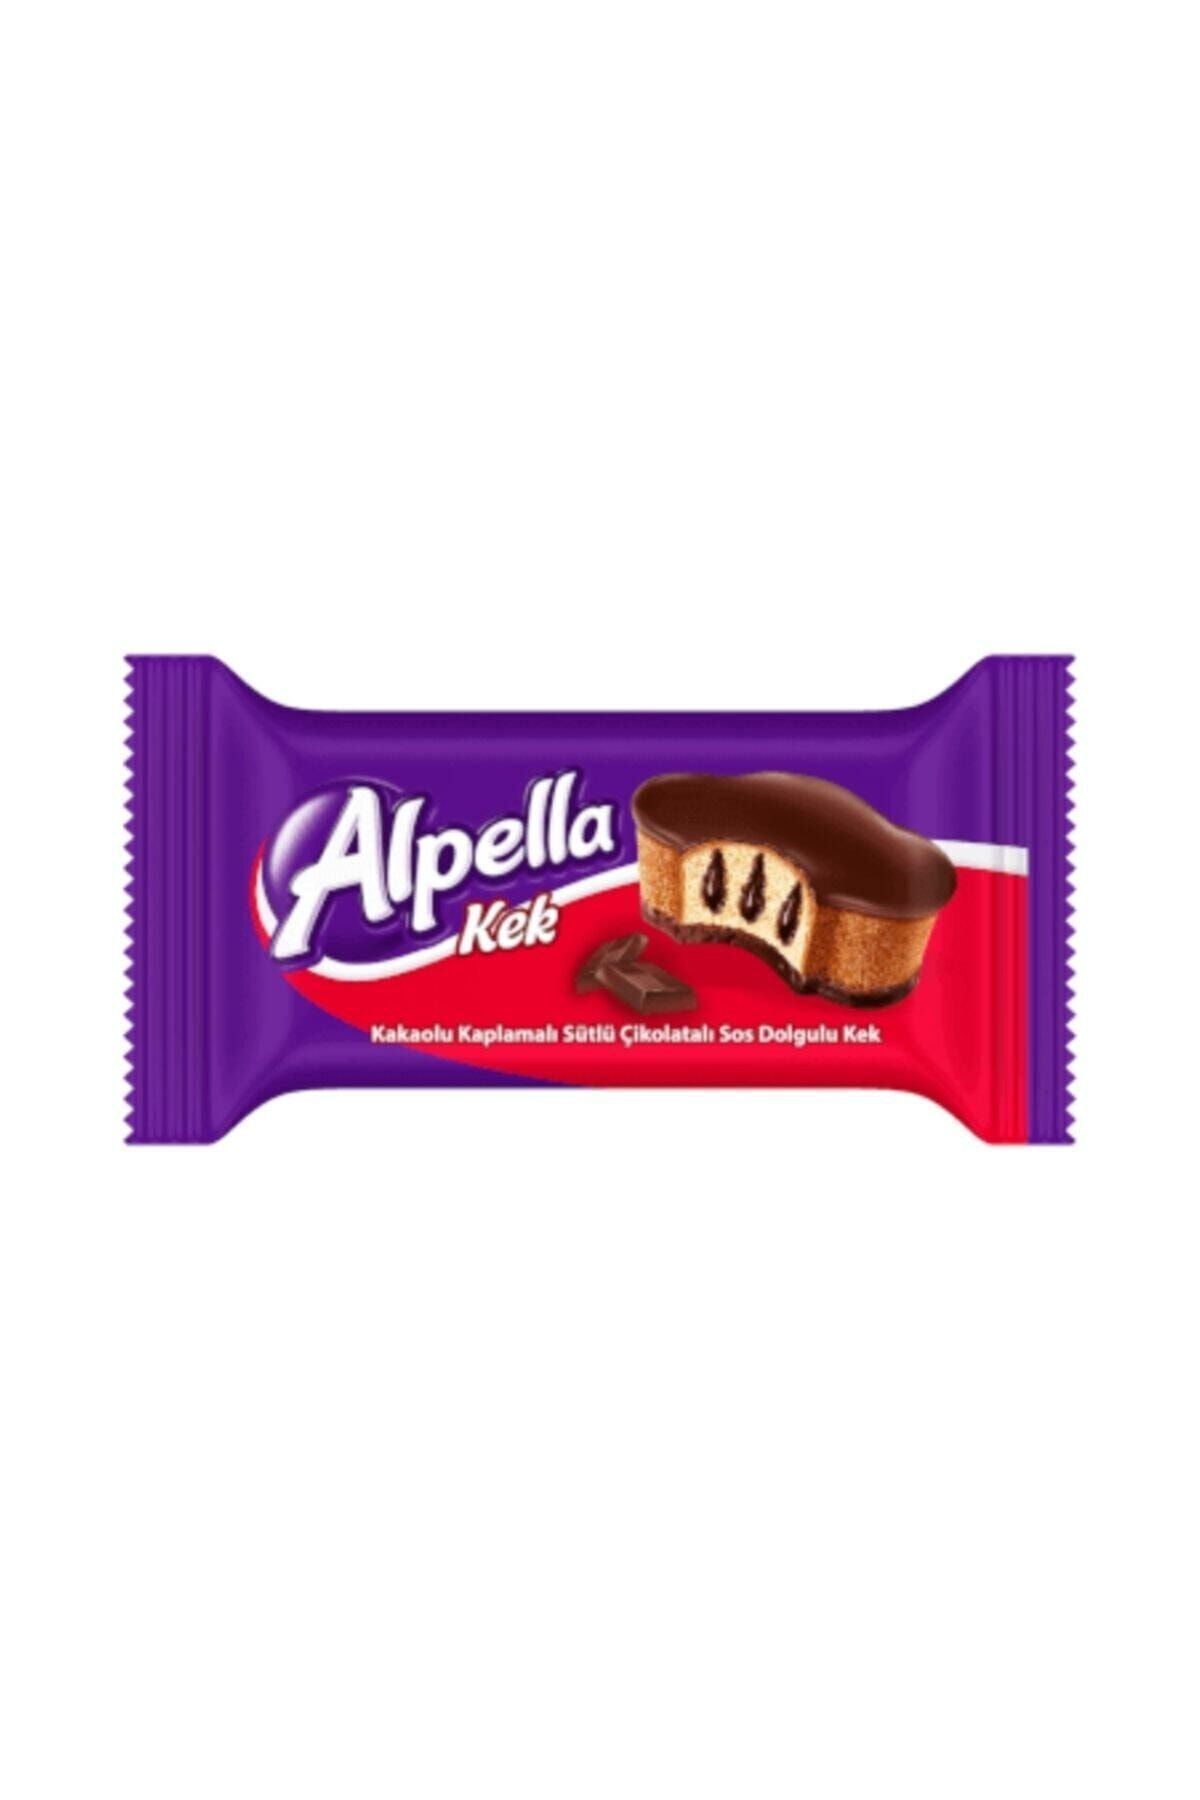 Alpella Kakao Kaplamalı Sütlü Çikolatalı Sodolgulu Kek 40 Gr 24 Adet